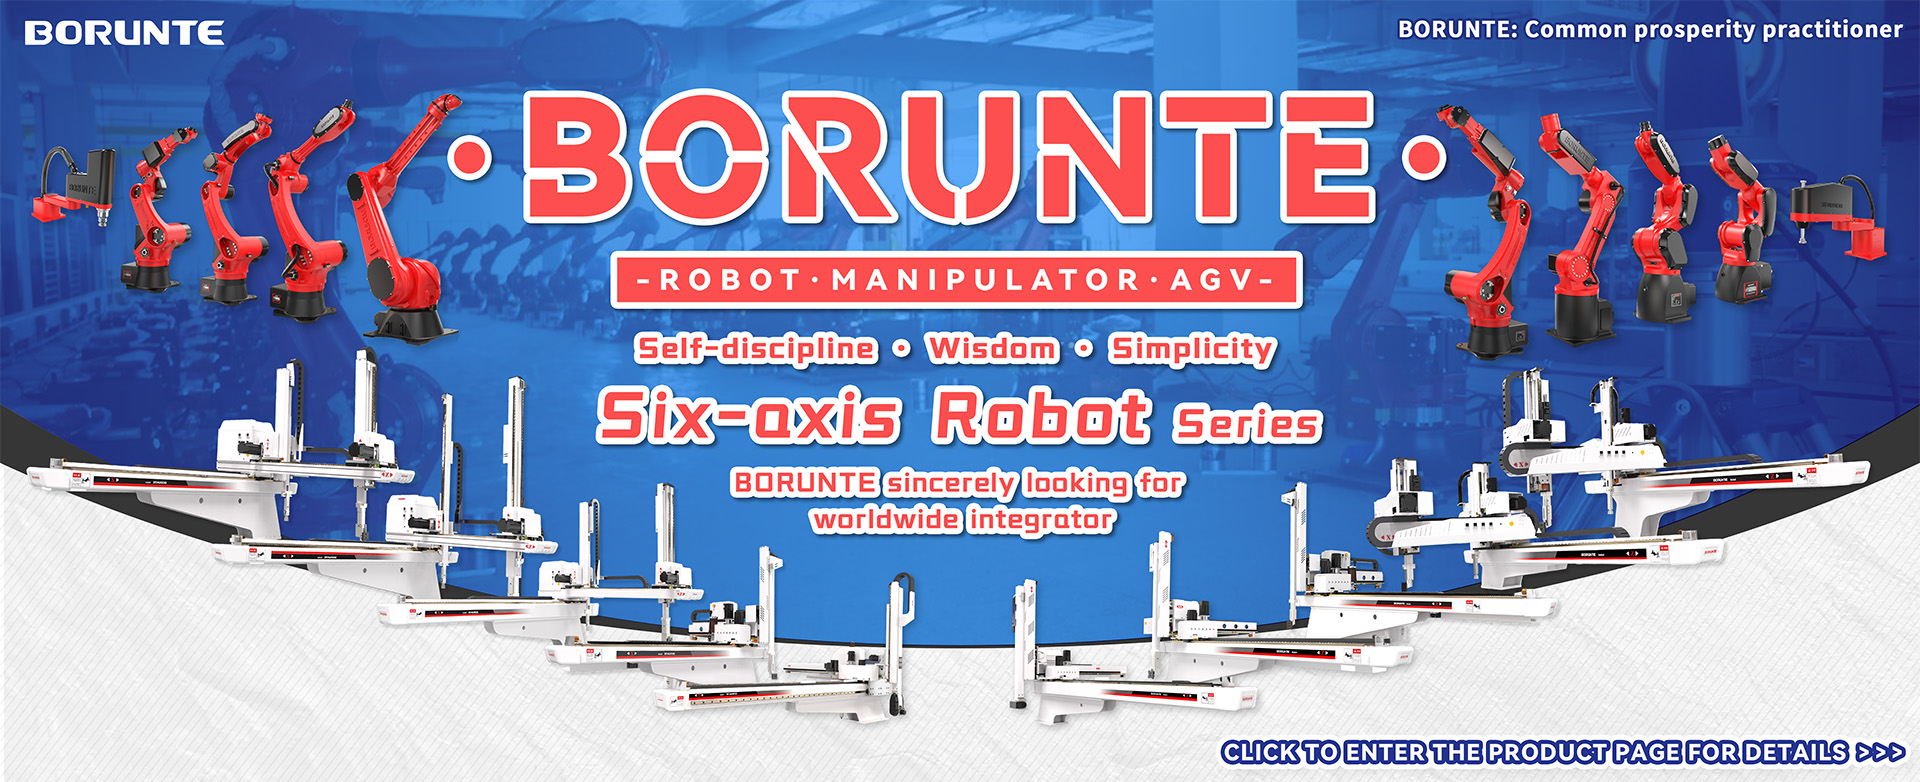 1. BORUNTE six axis robot promotional image